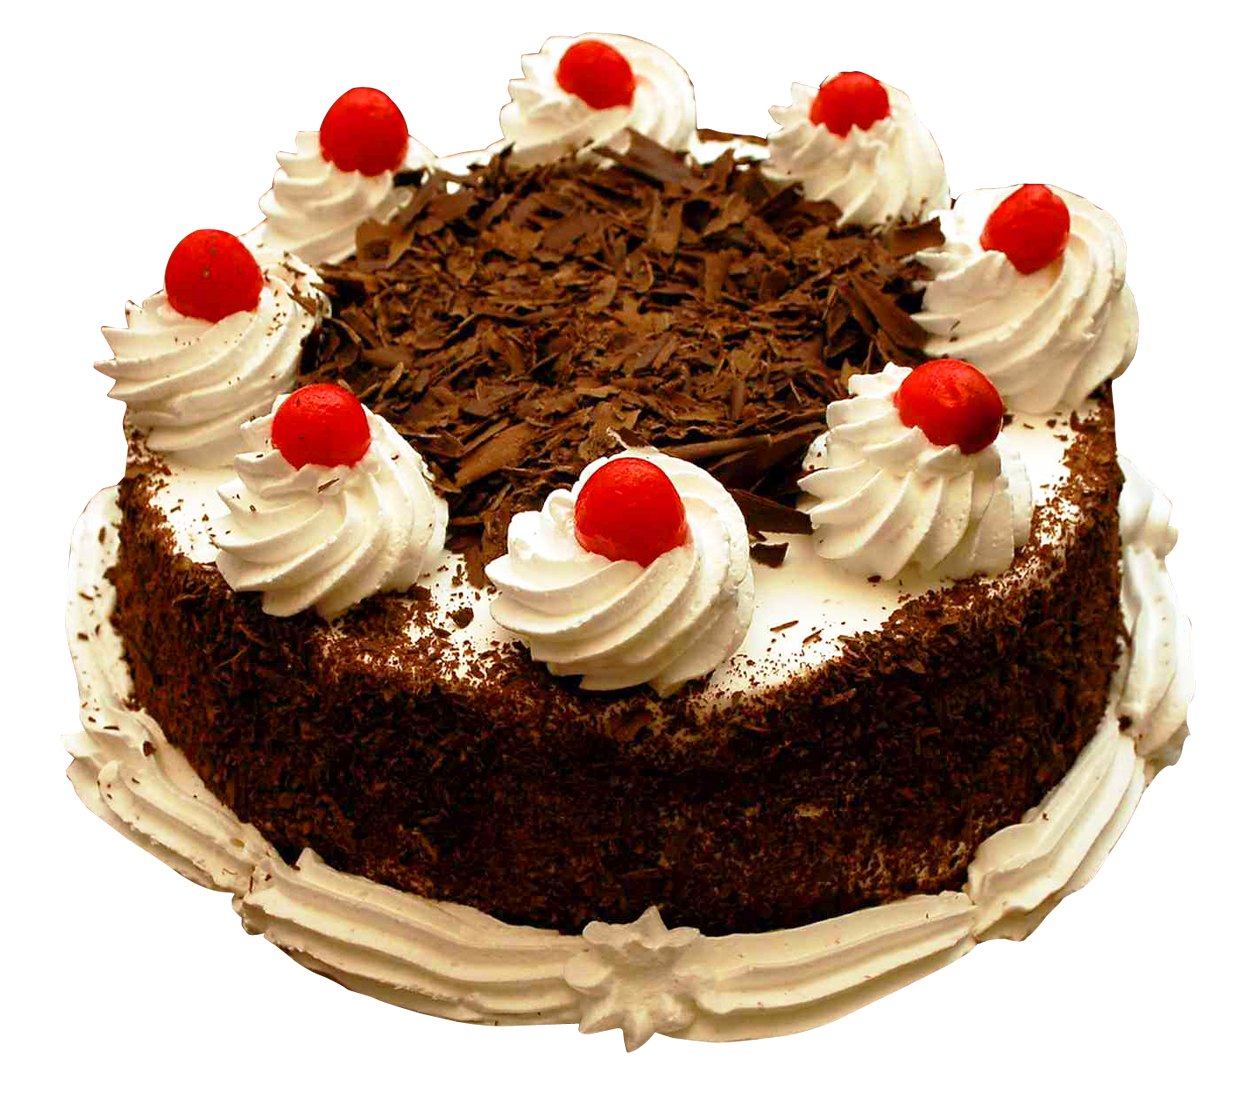 Chocolate cake PNG image free Download